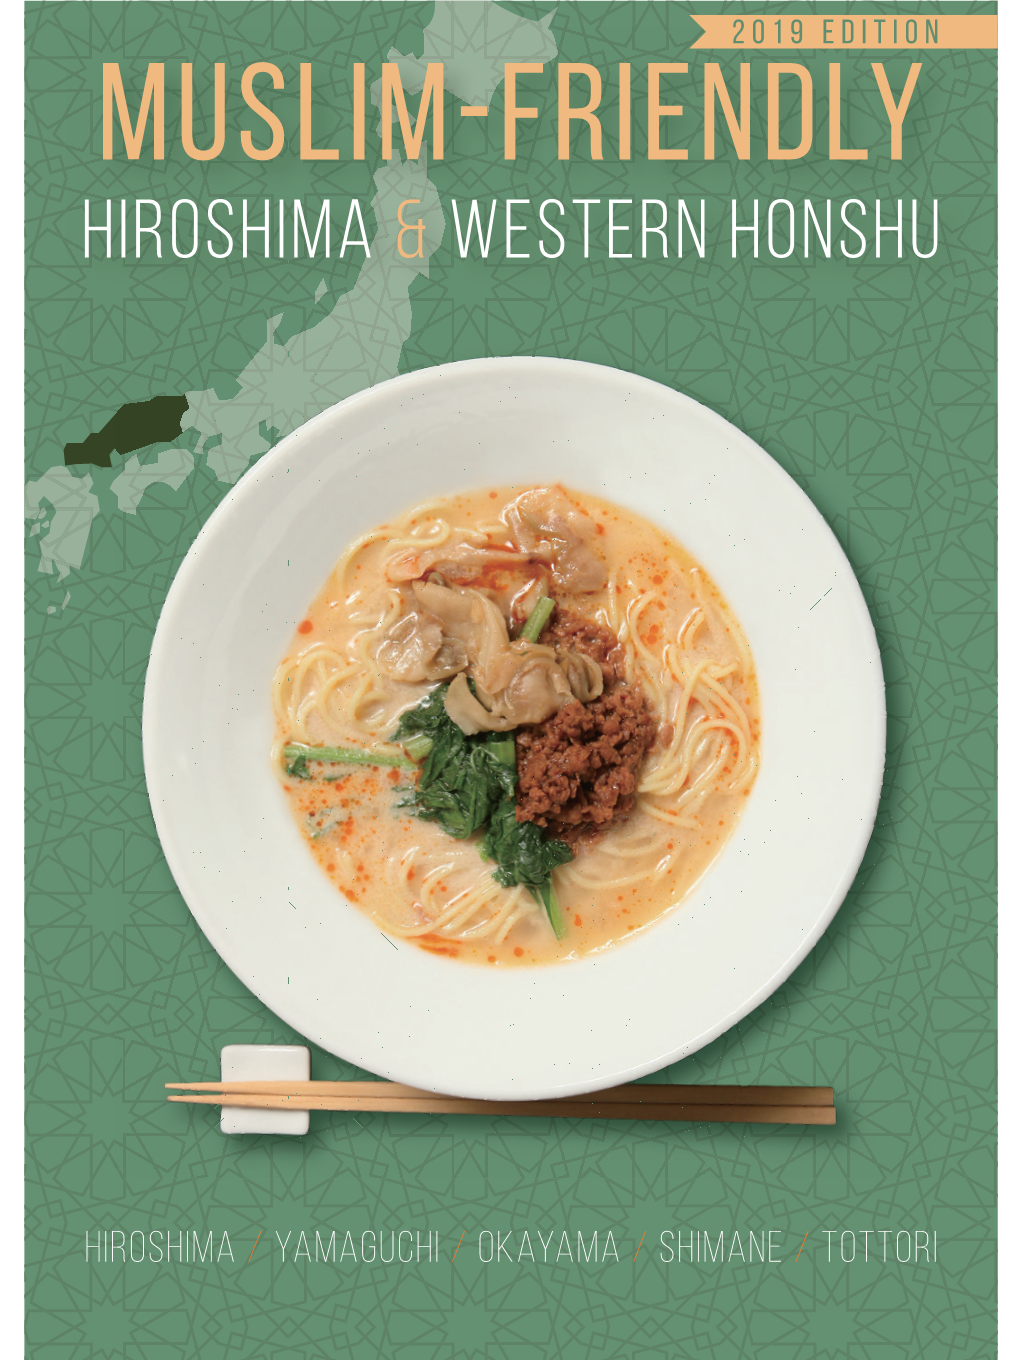 Hiroshima & Western Honshu